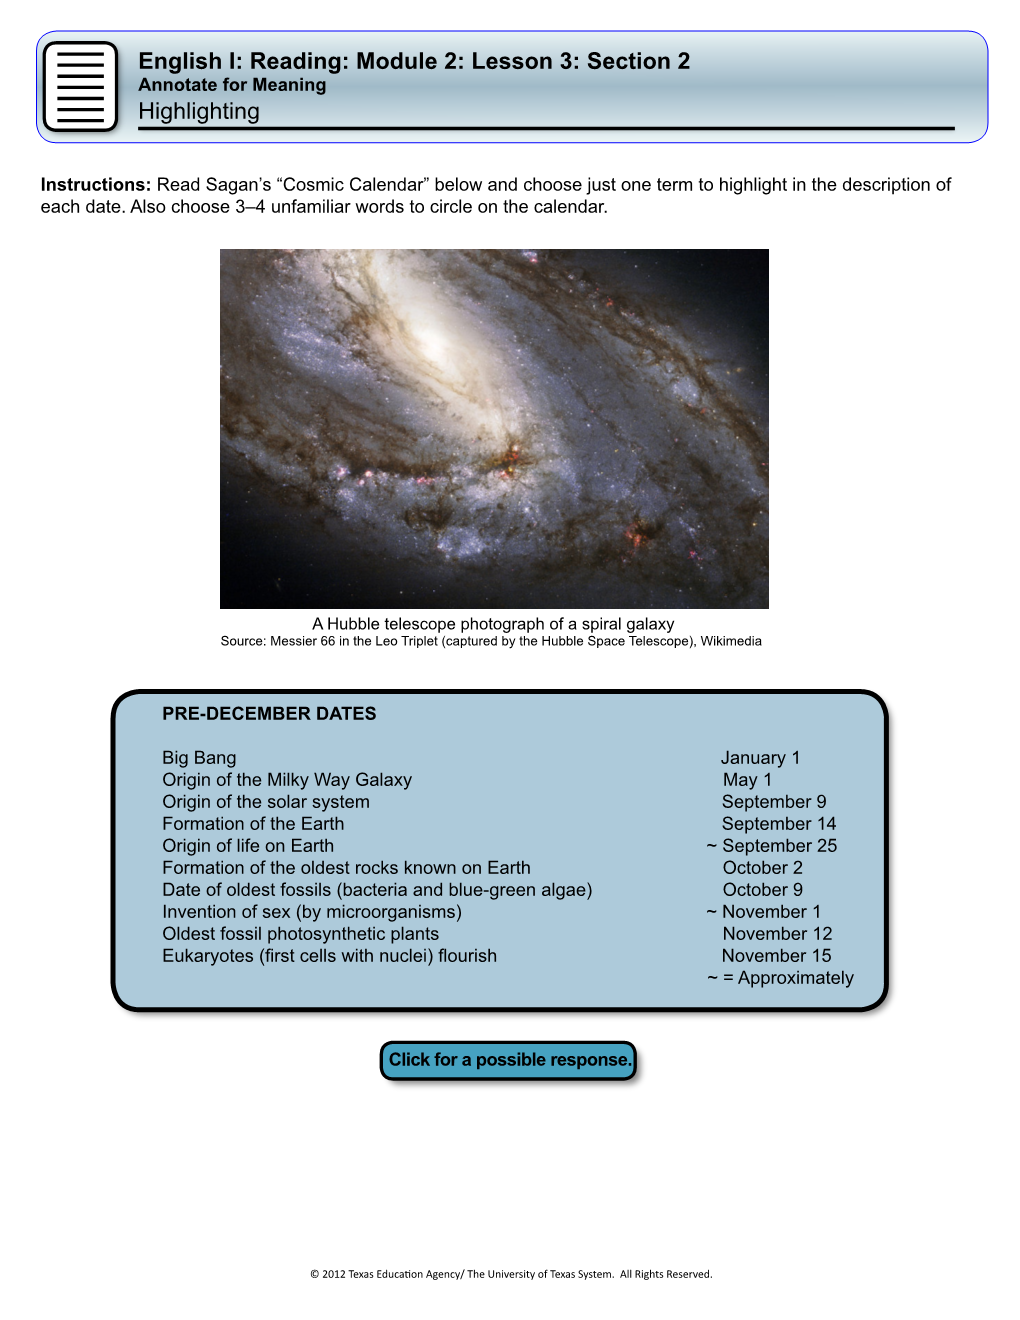 Carl Sagan's “Cosmic Calendar”